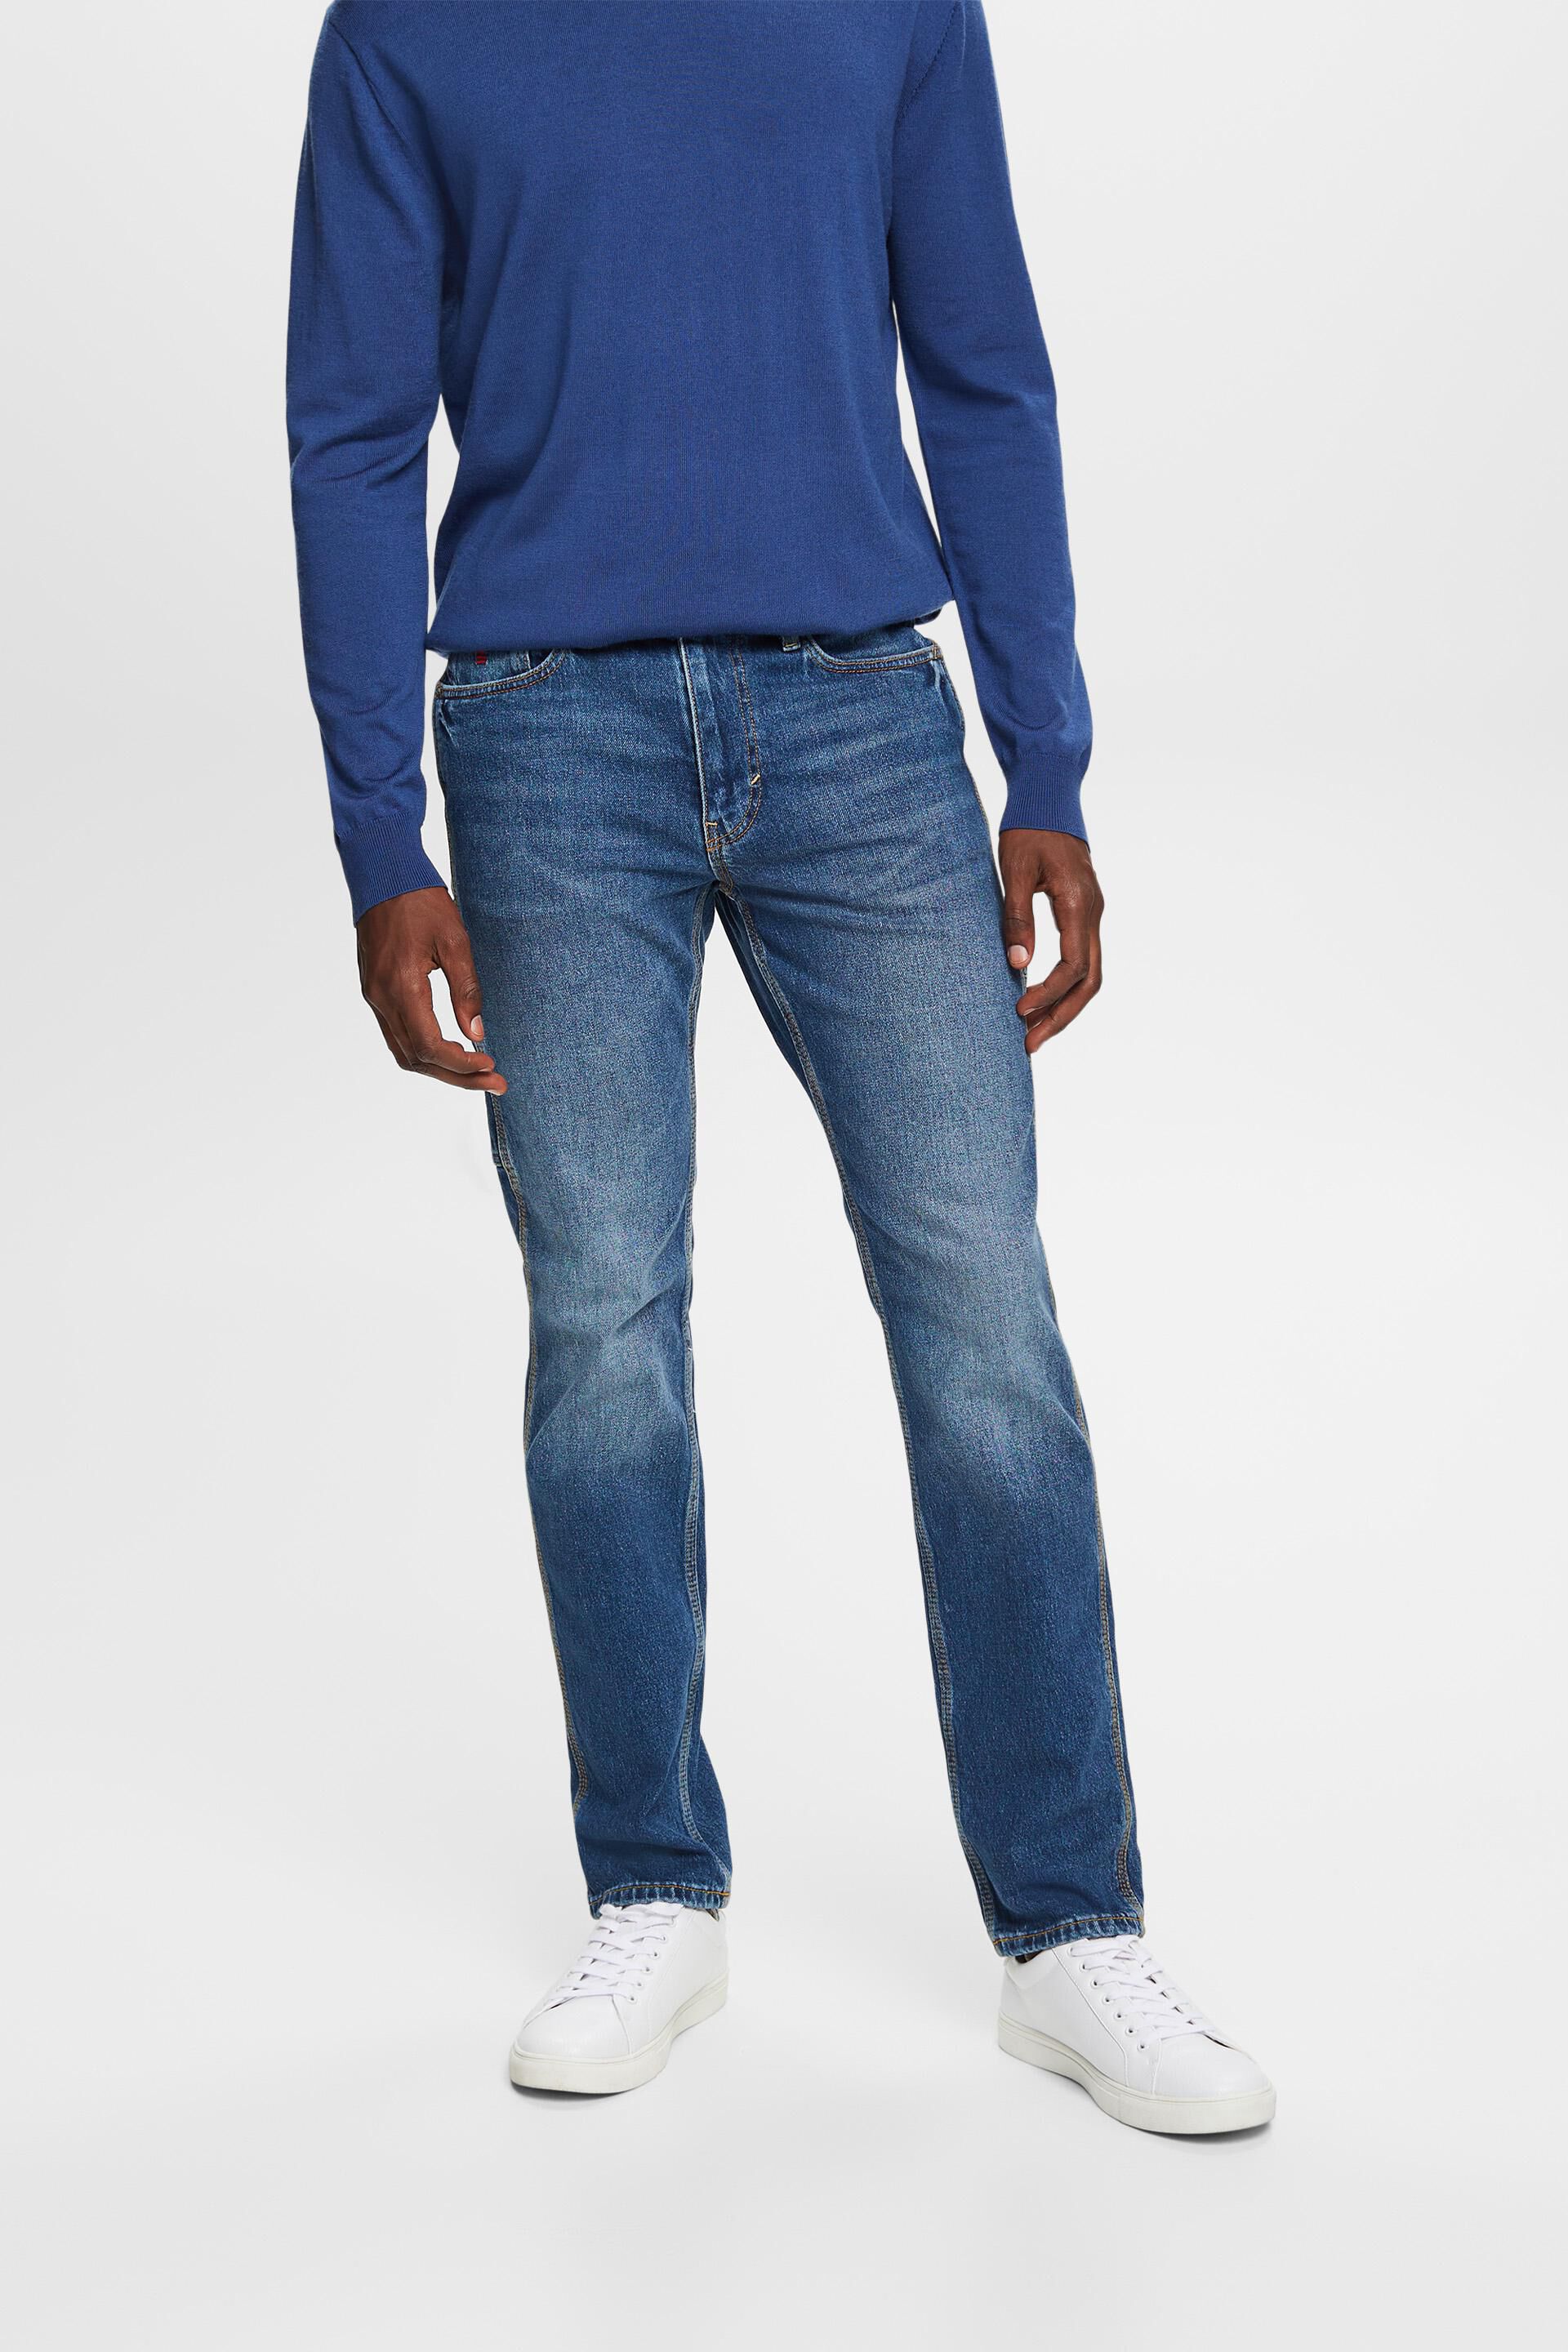 Esprit Carpenter jeans fit straight